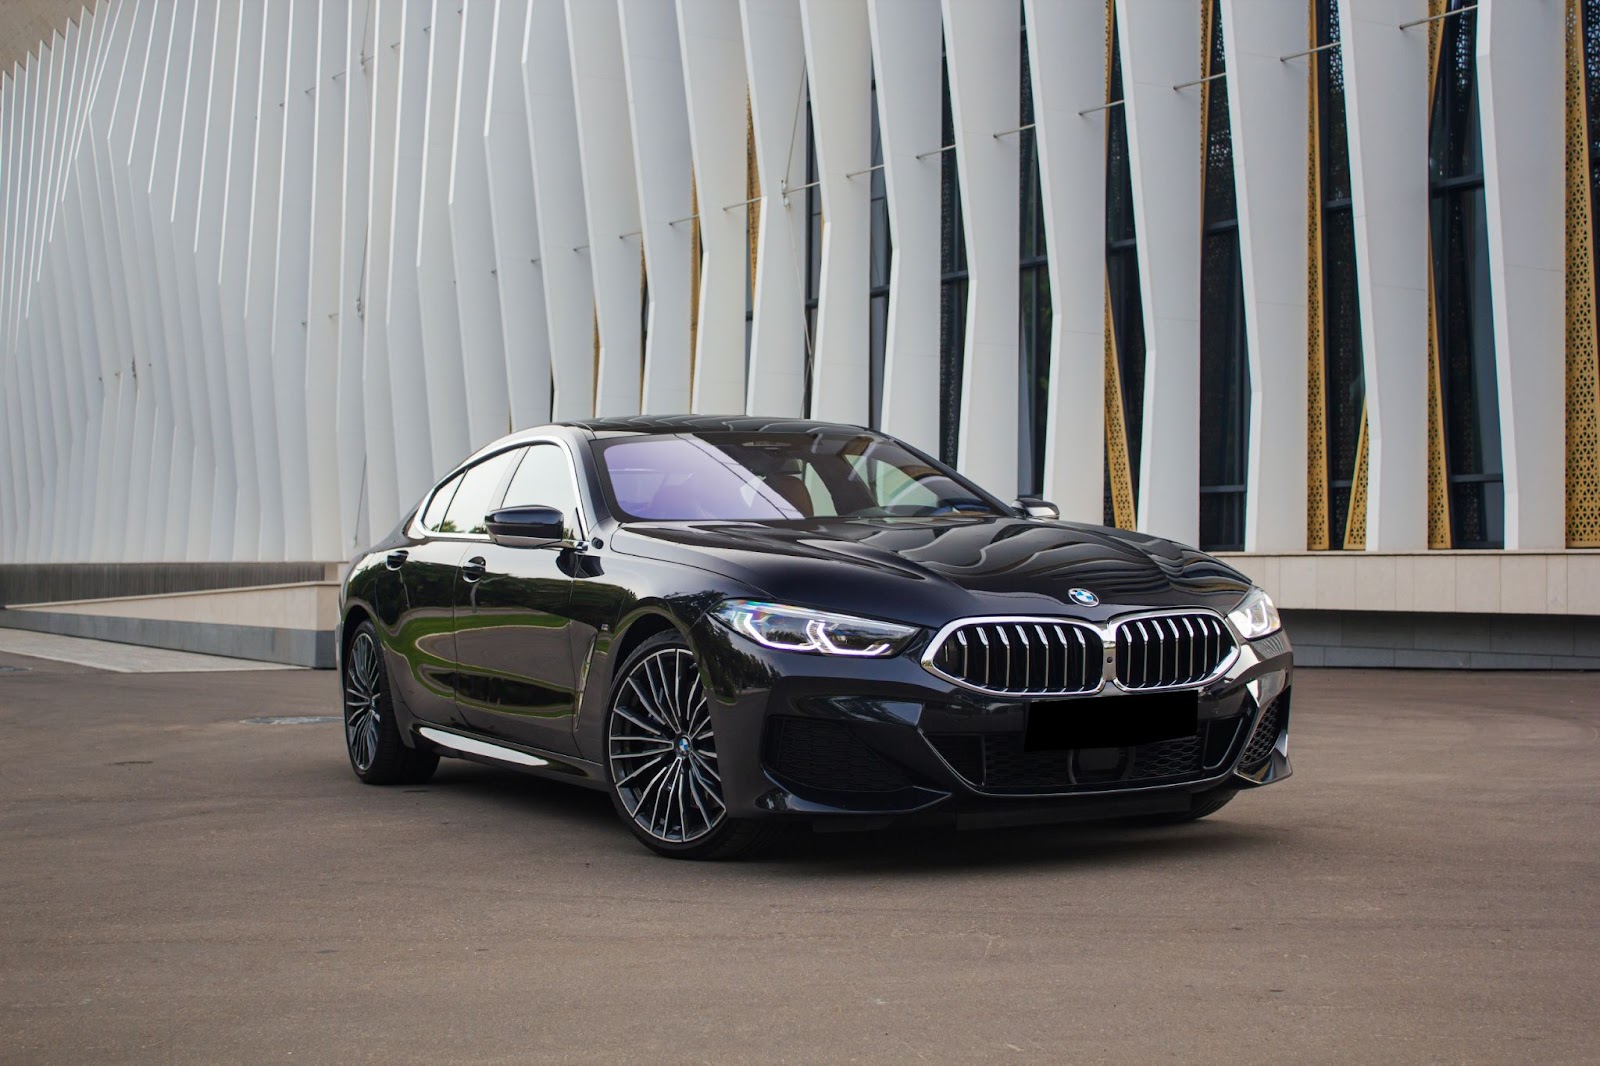 parked black BMW series 8